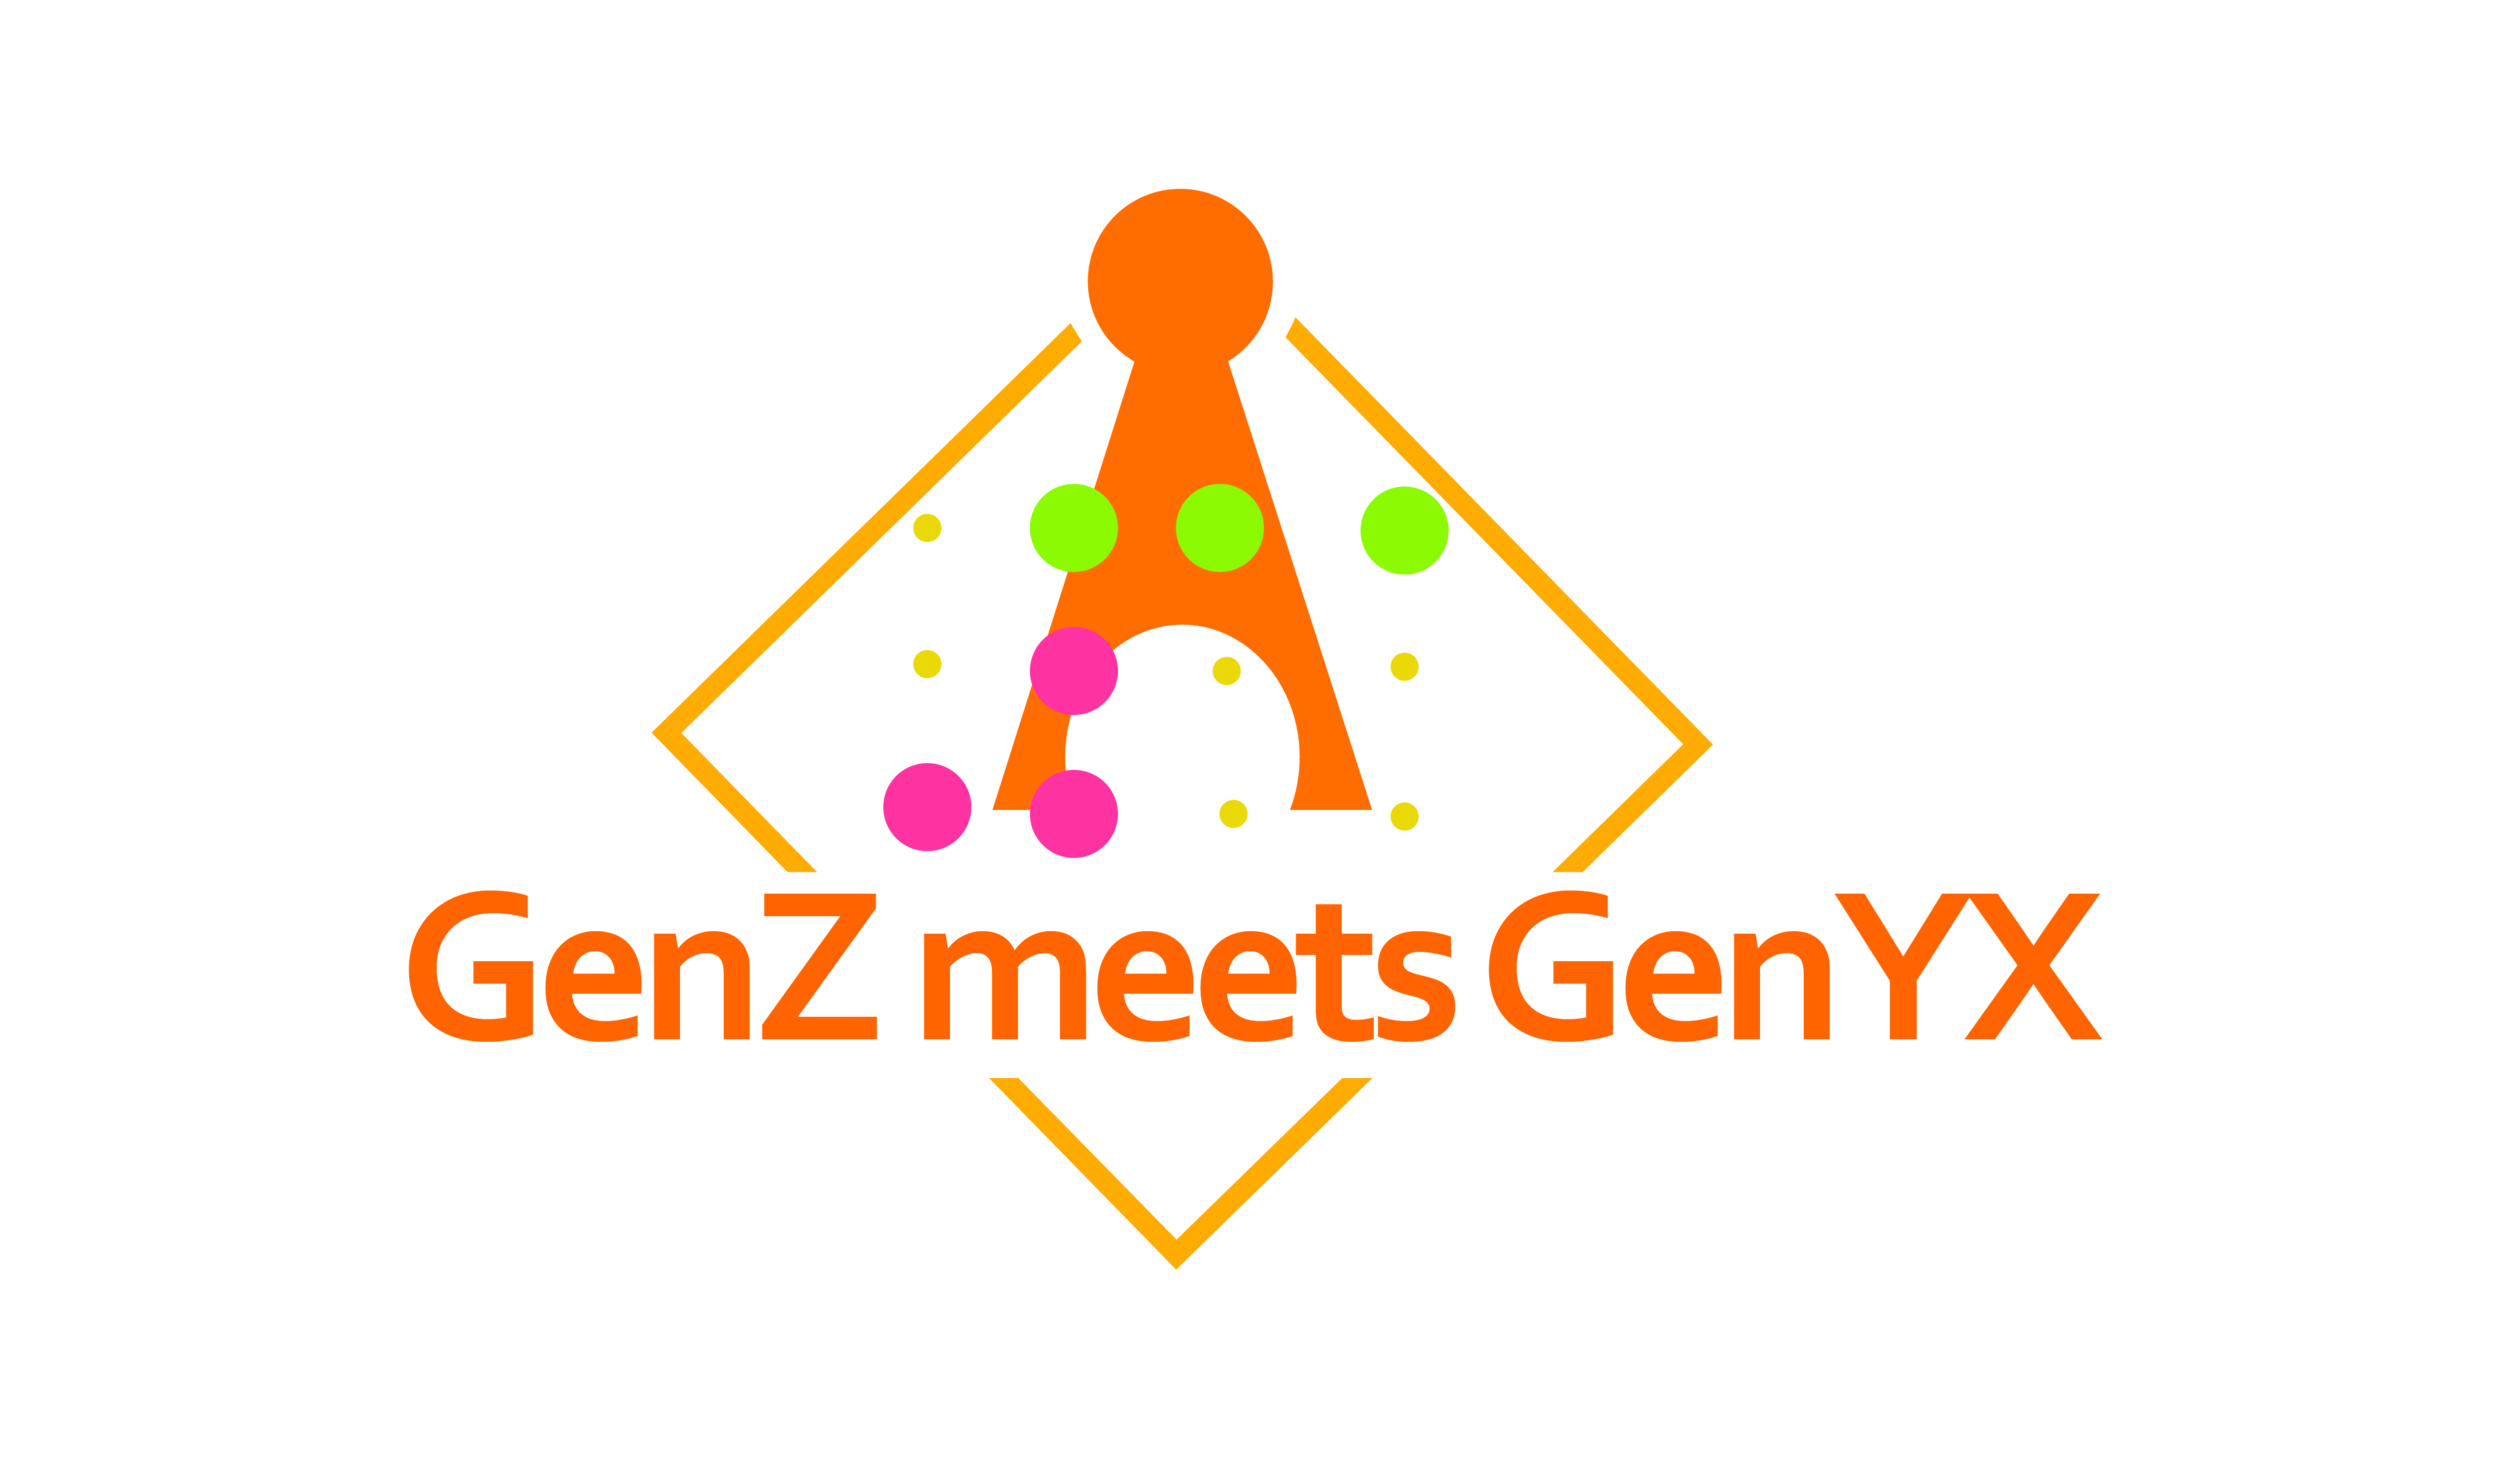 www.genzmeetsgenyx.com